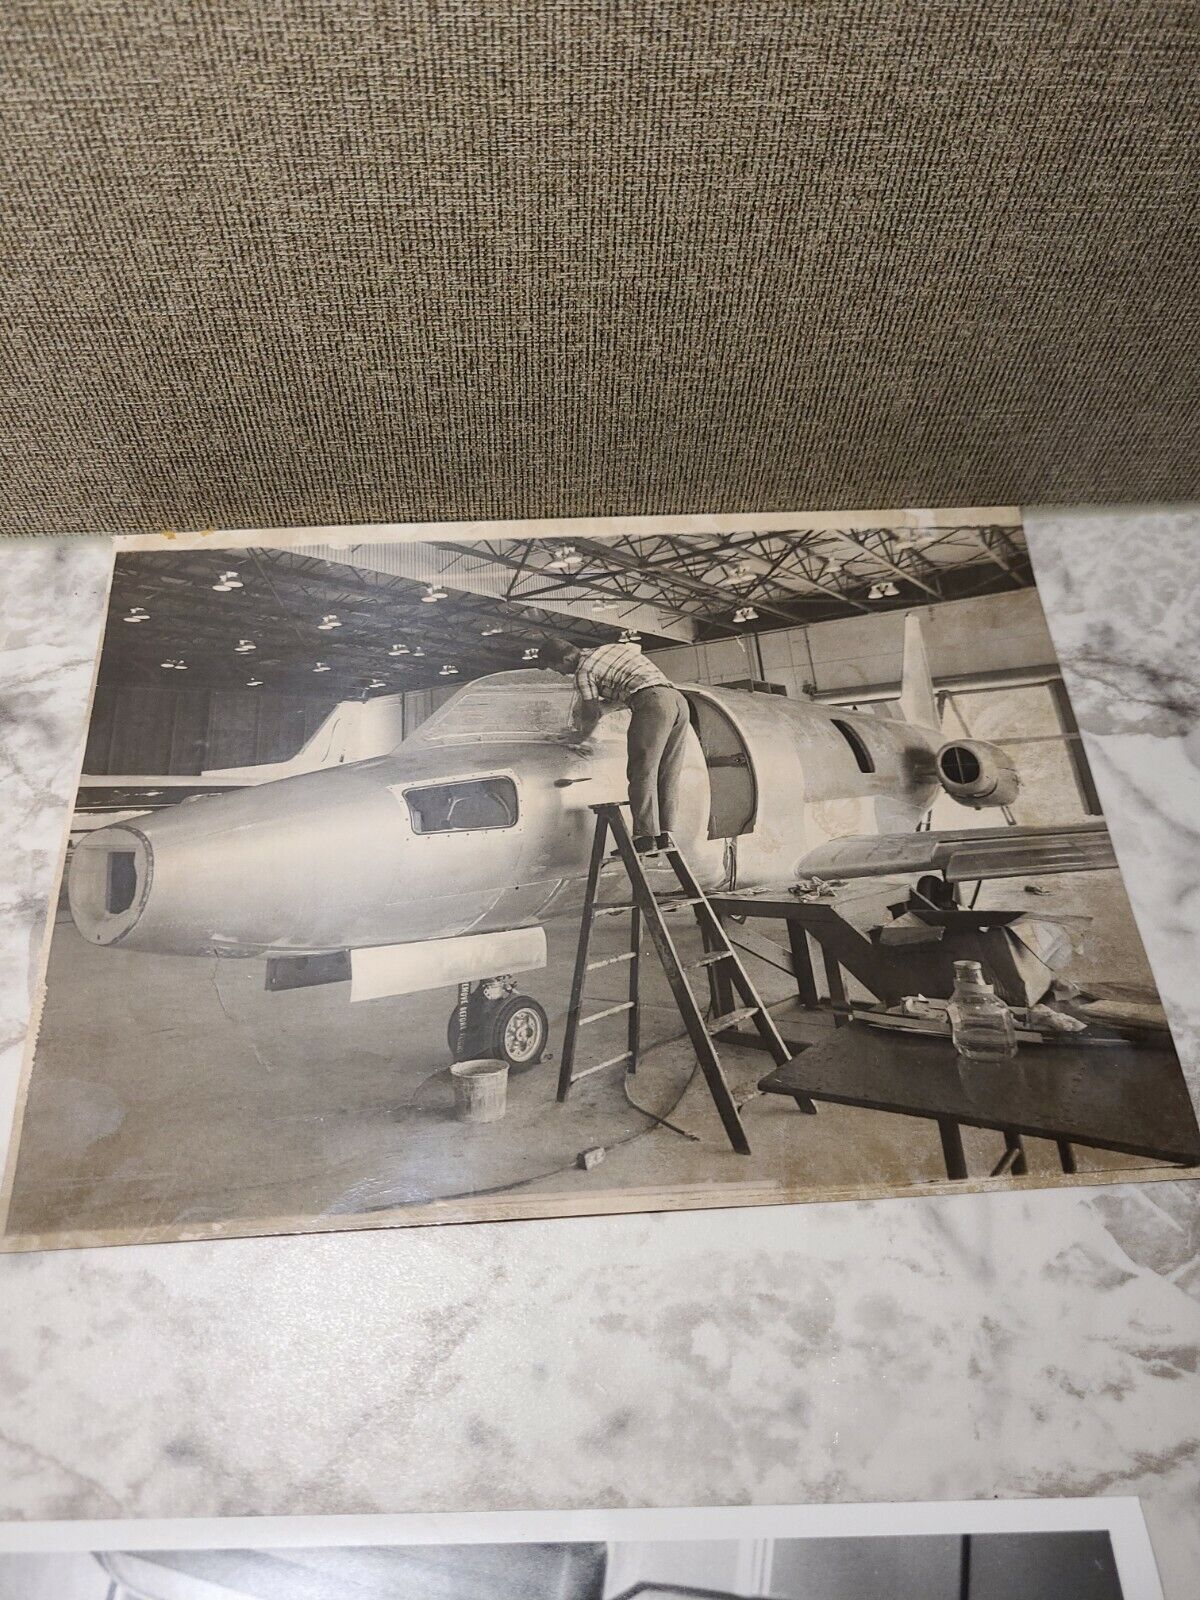 1968 Sabreliner Press Photo Jet Twin Under Construction Business Hangar Ladder 